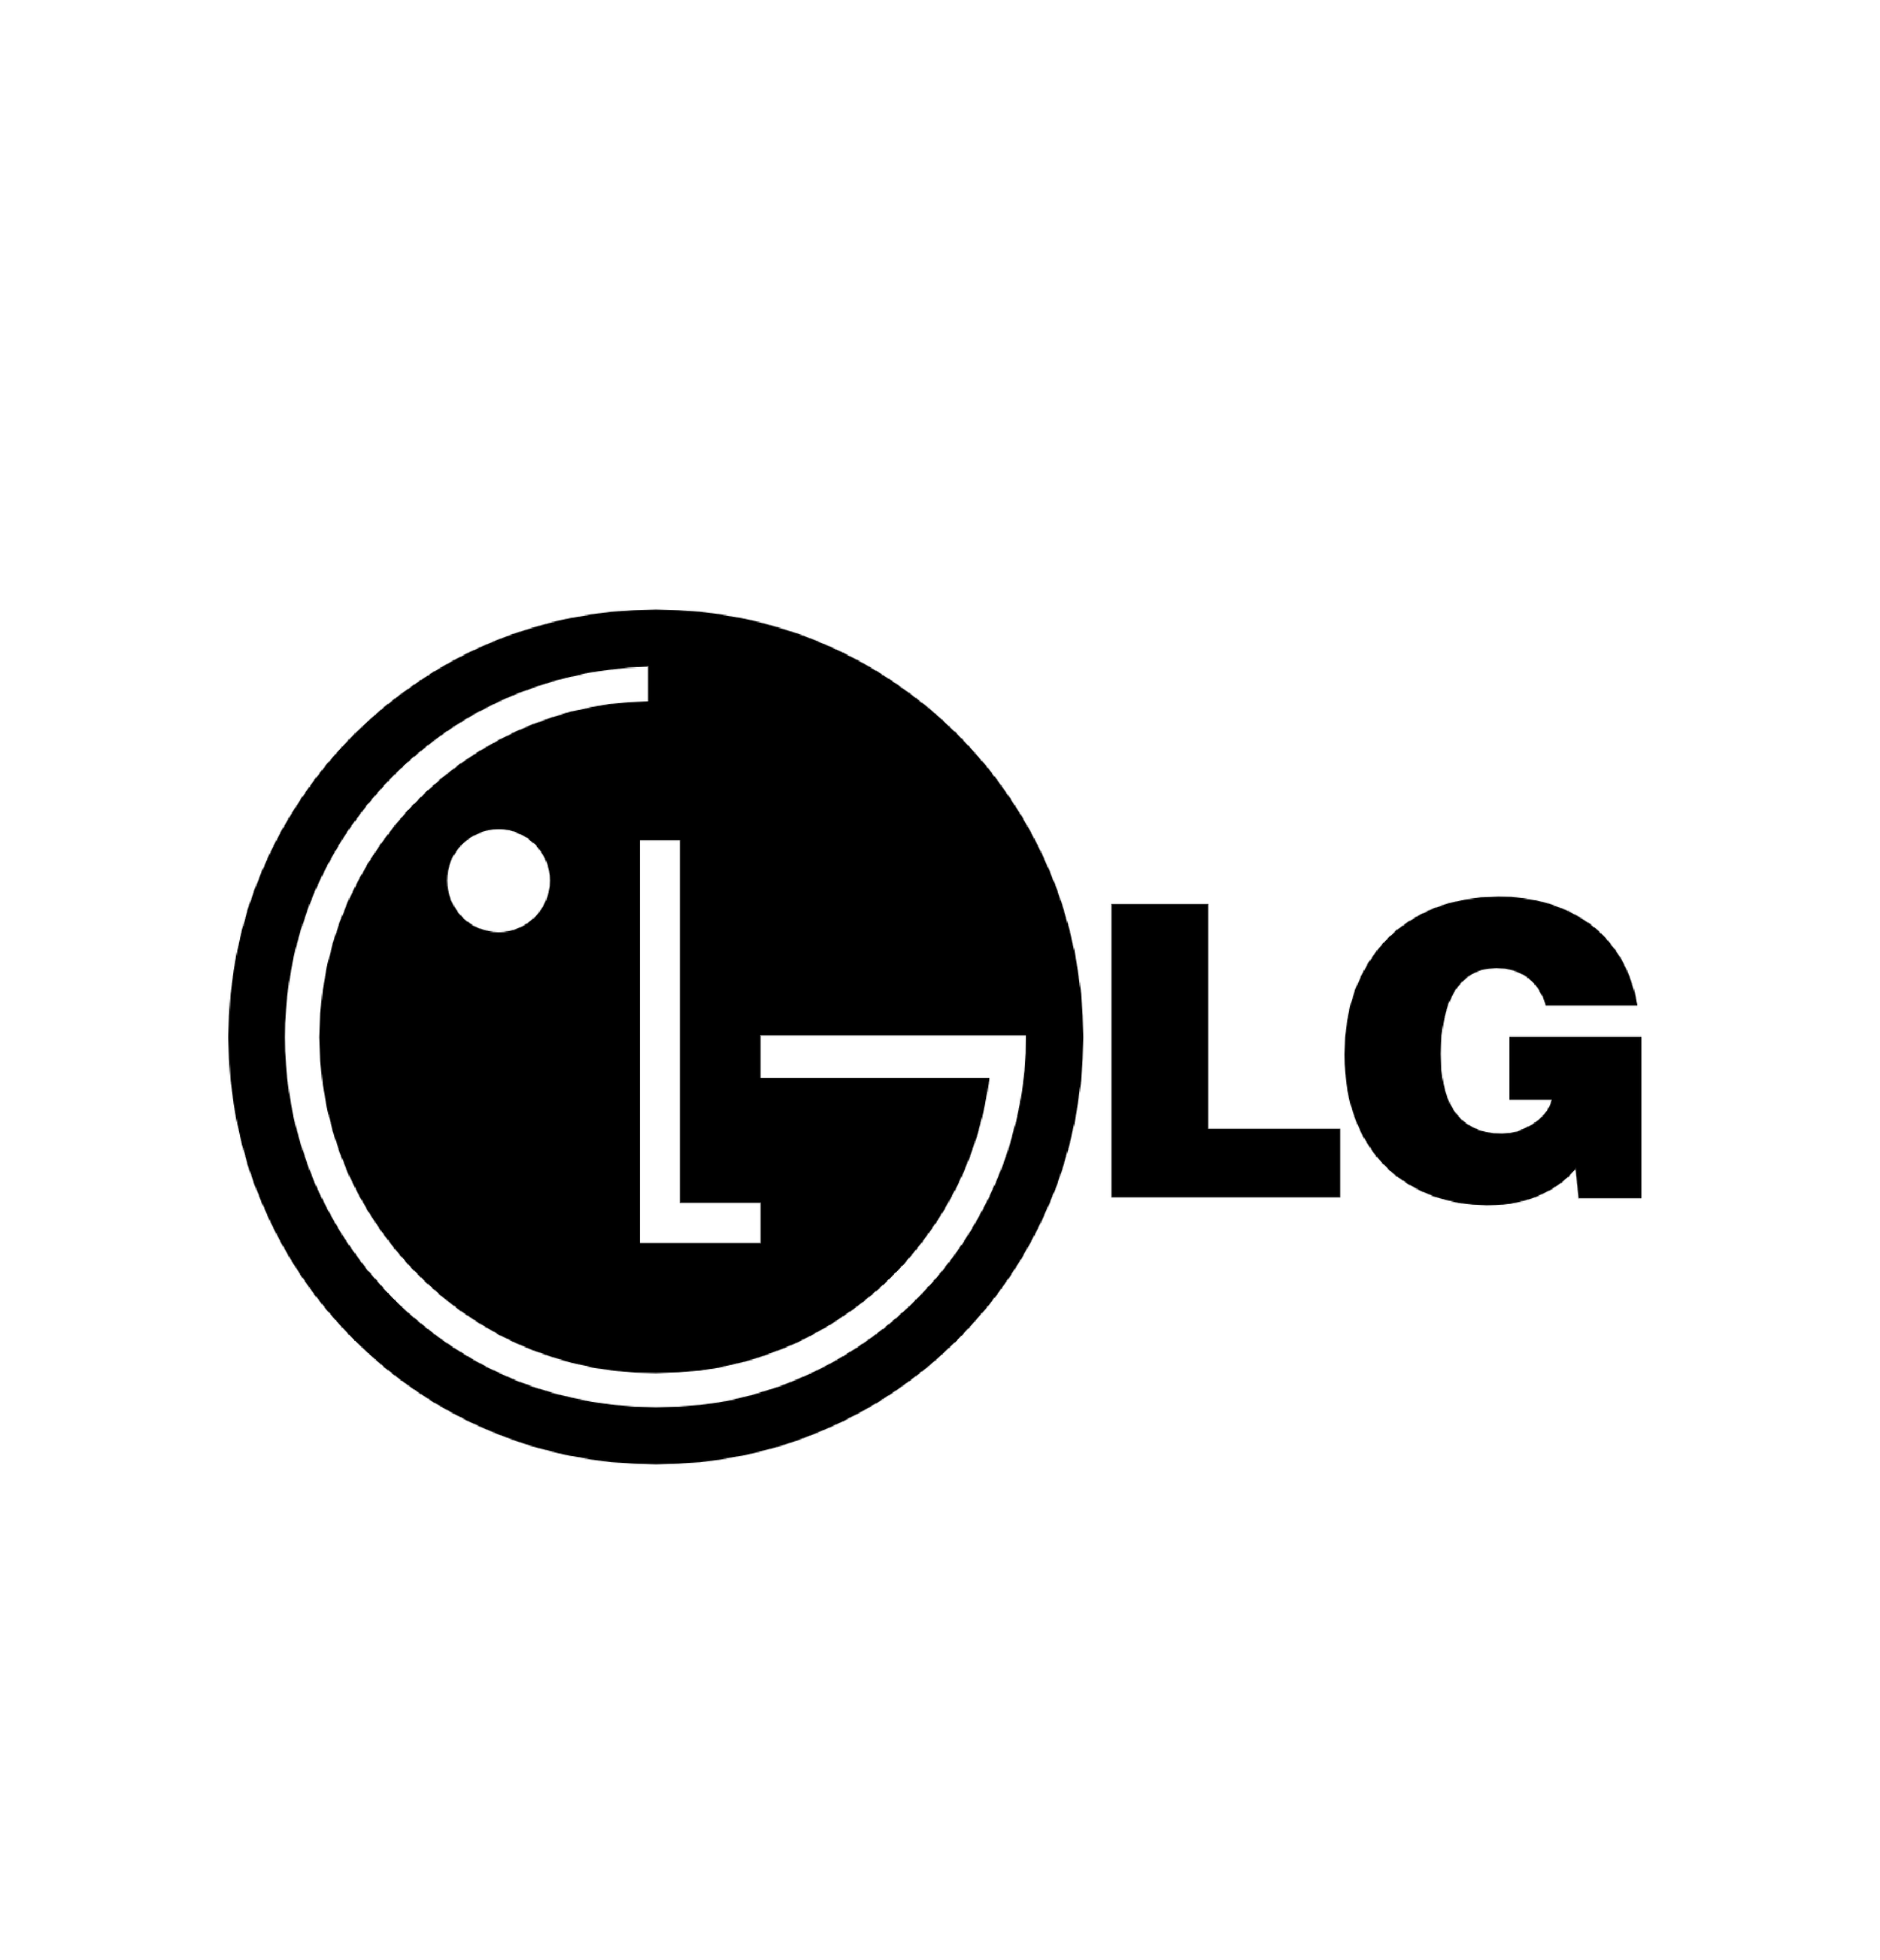 Lg телевизоры логотип. Марка LG. Знак LG. Бренд логотип LG. LG логотип без фона.